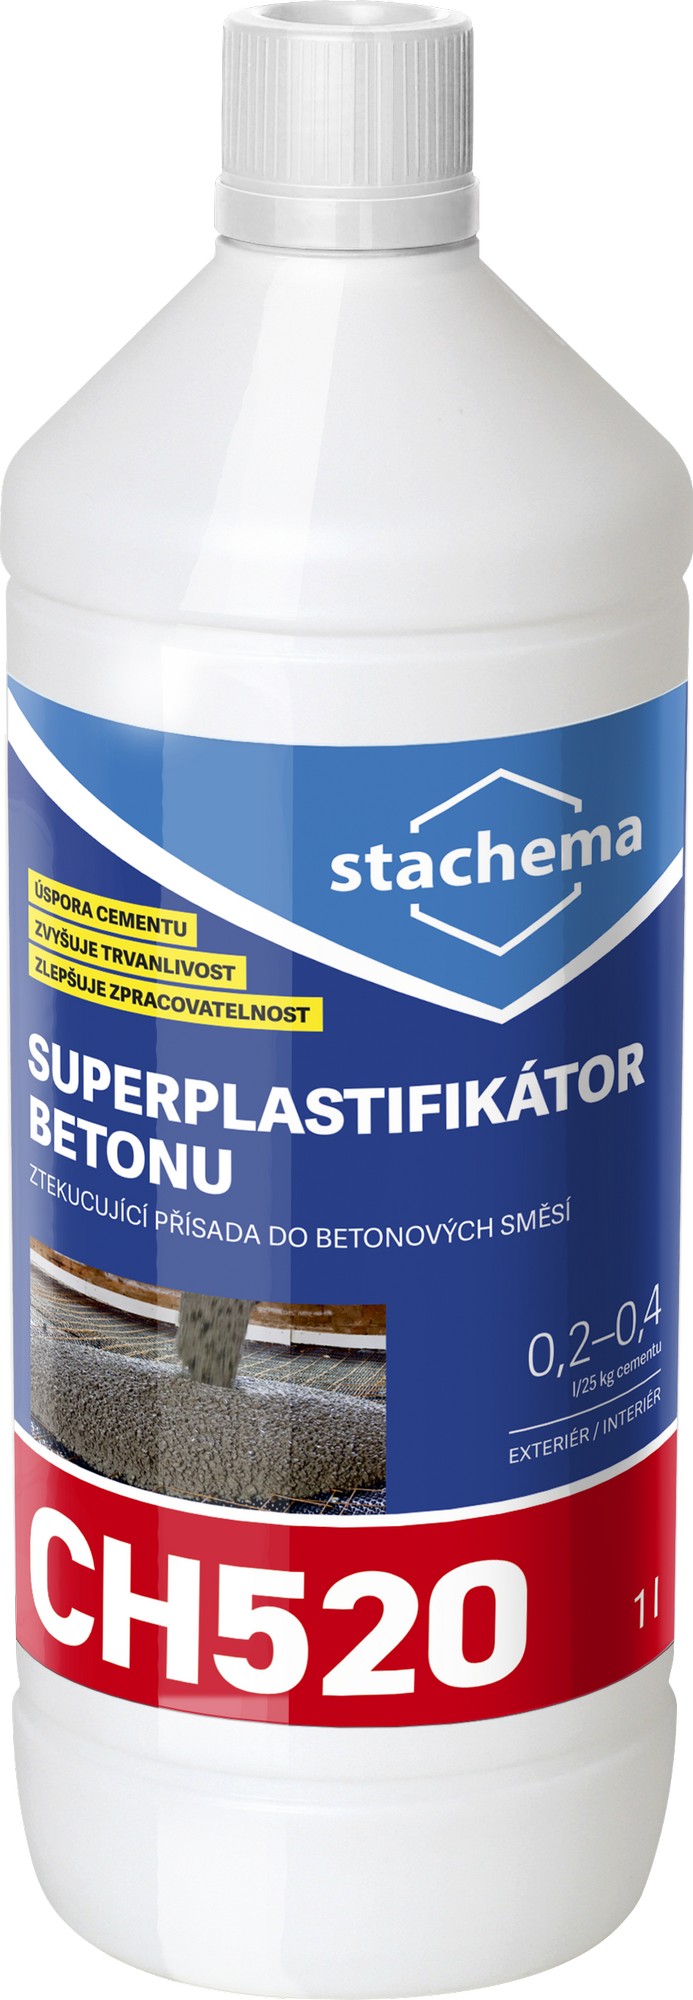 Superplastifikátor betonu Stachema CH520 5 l